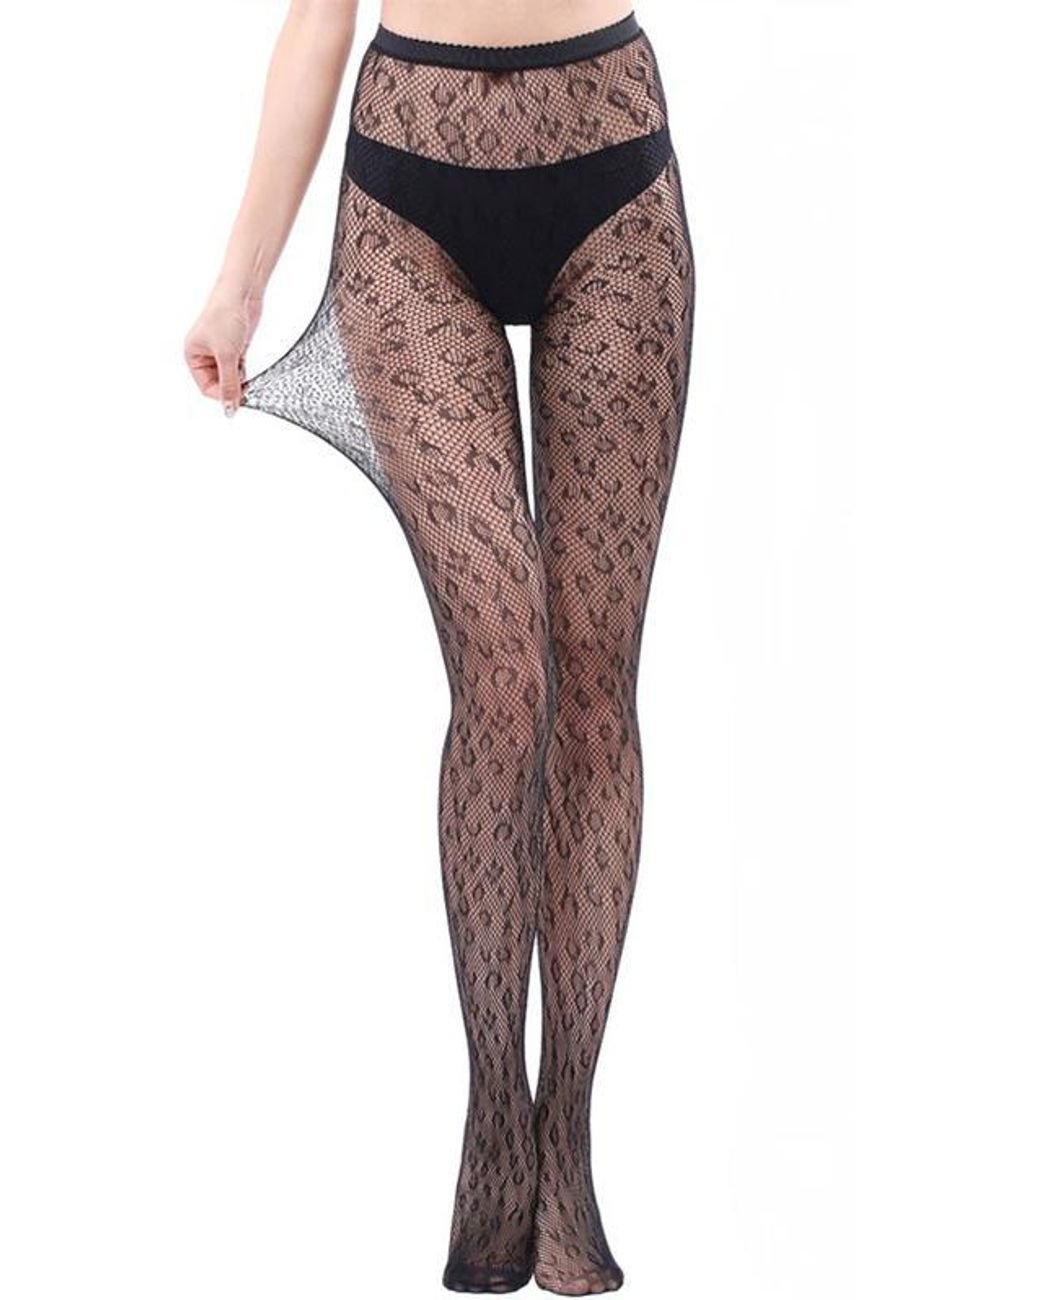 Zaful Synthetic Fashion Leopard Fishnet Long Pantyhose in Black | Lyst